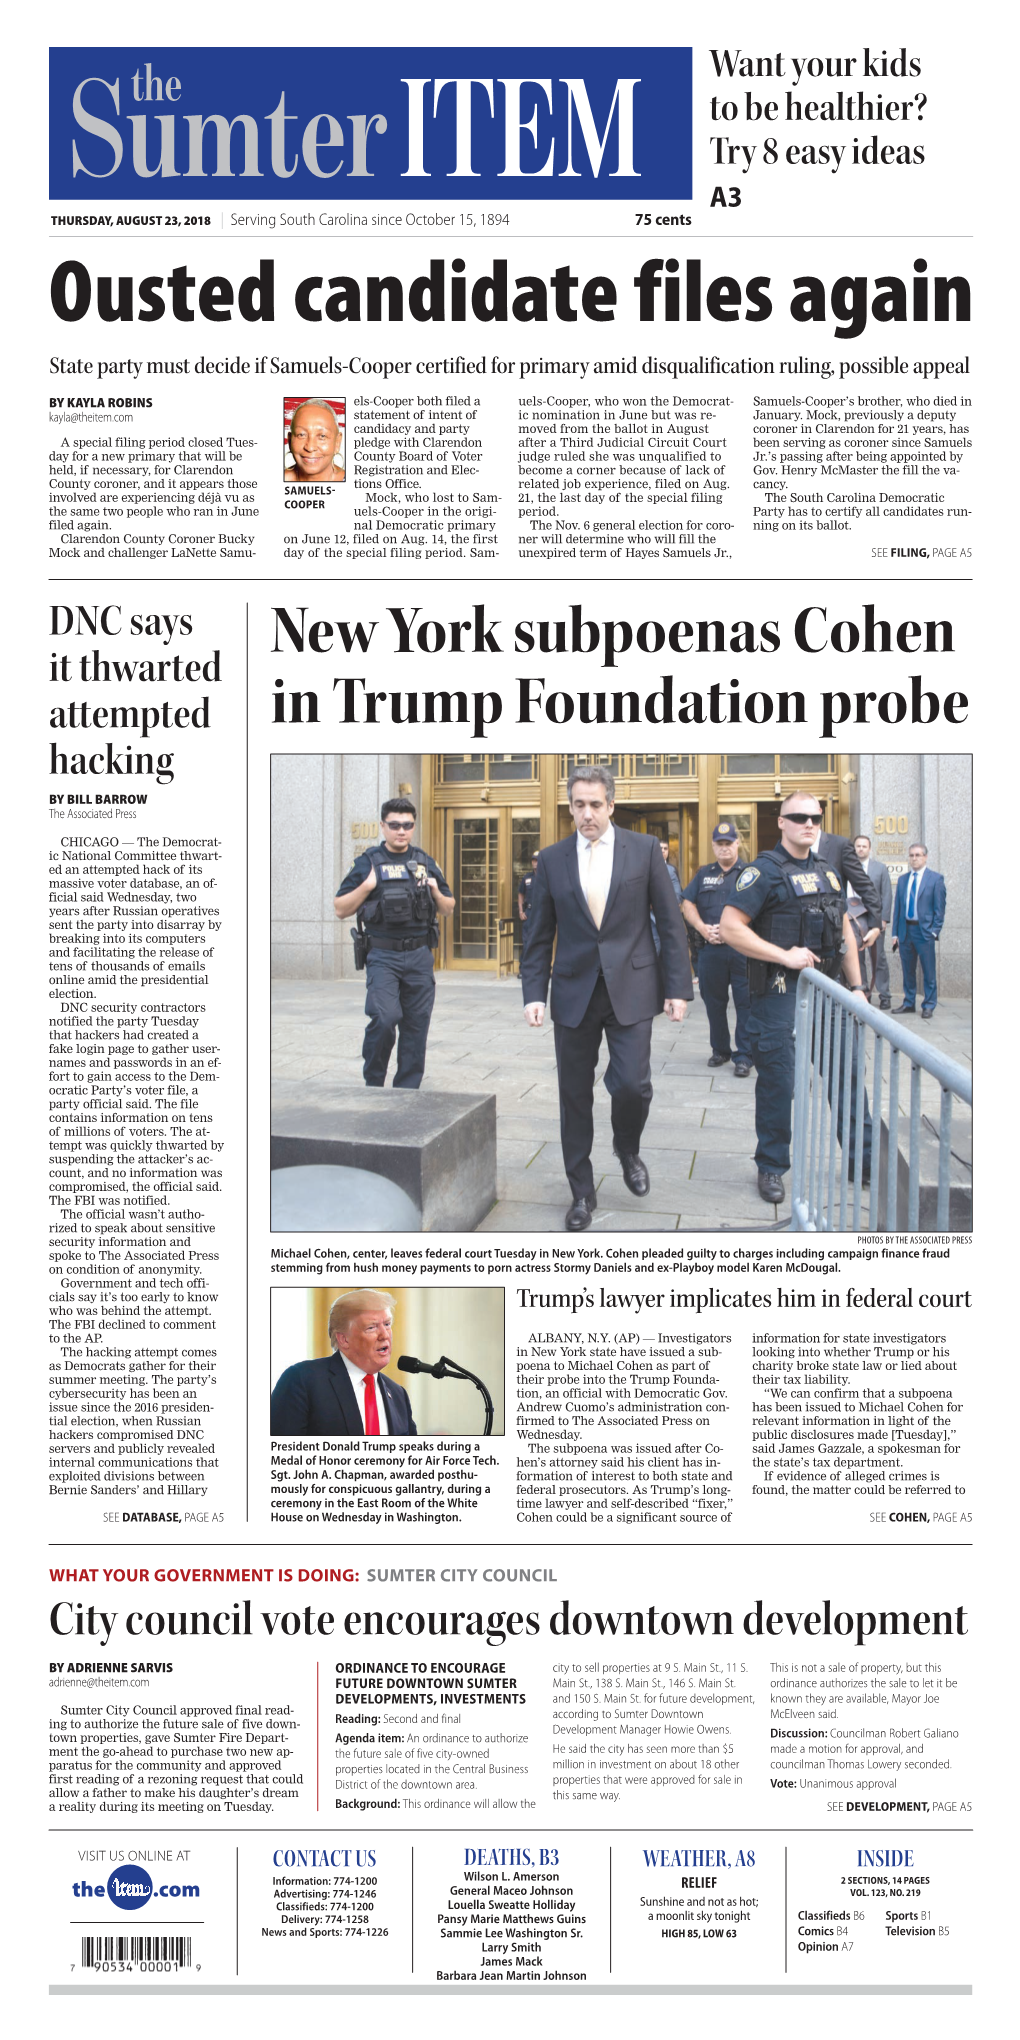 New York Subpoenas Cohen in Trump Foundation Probe